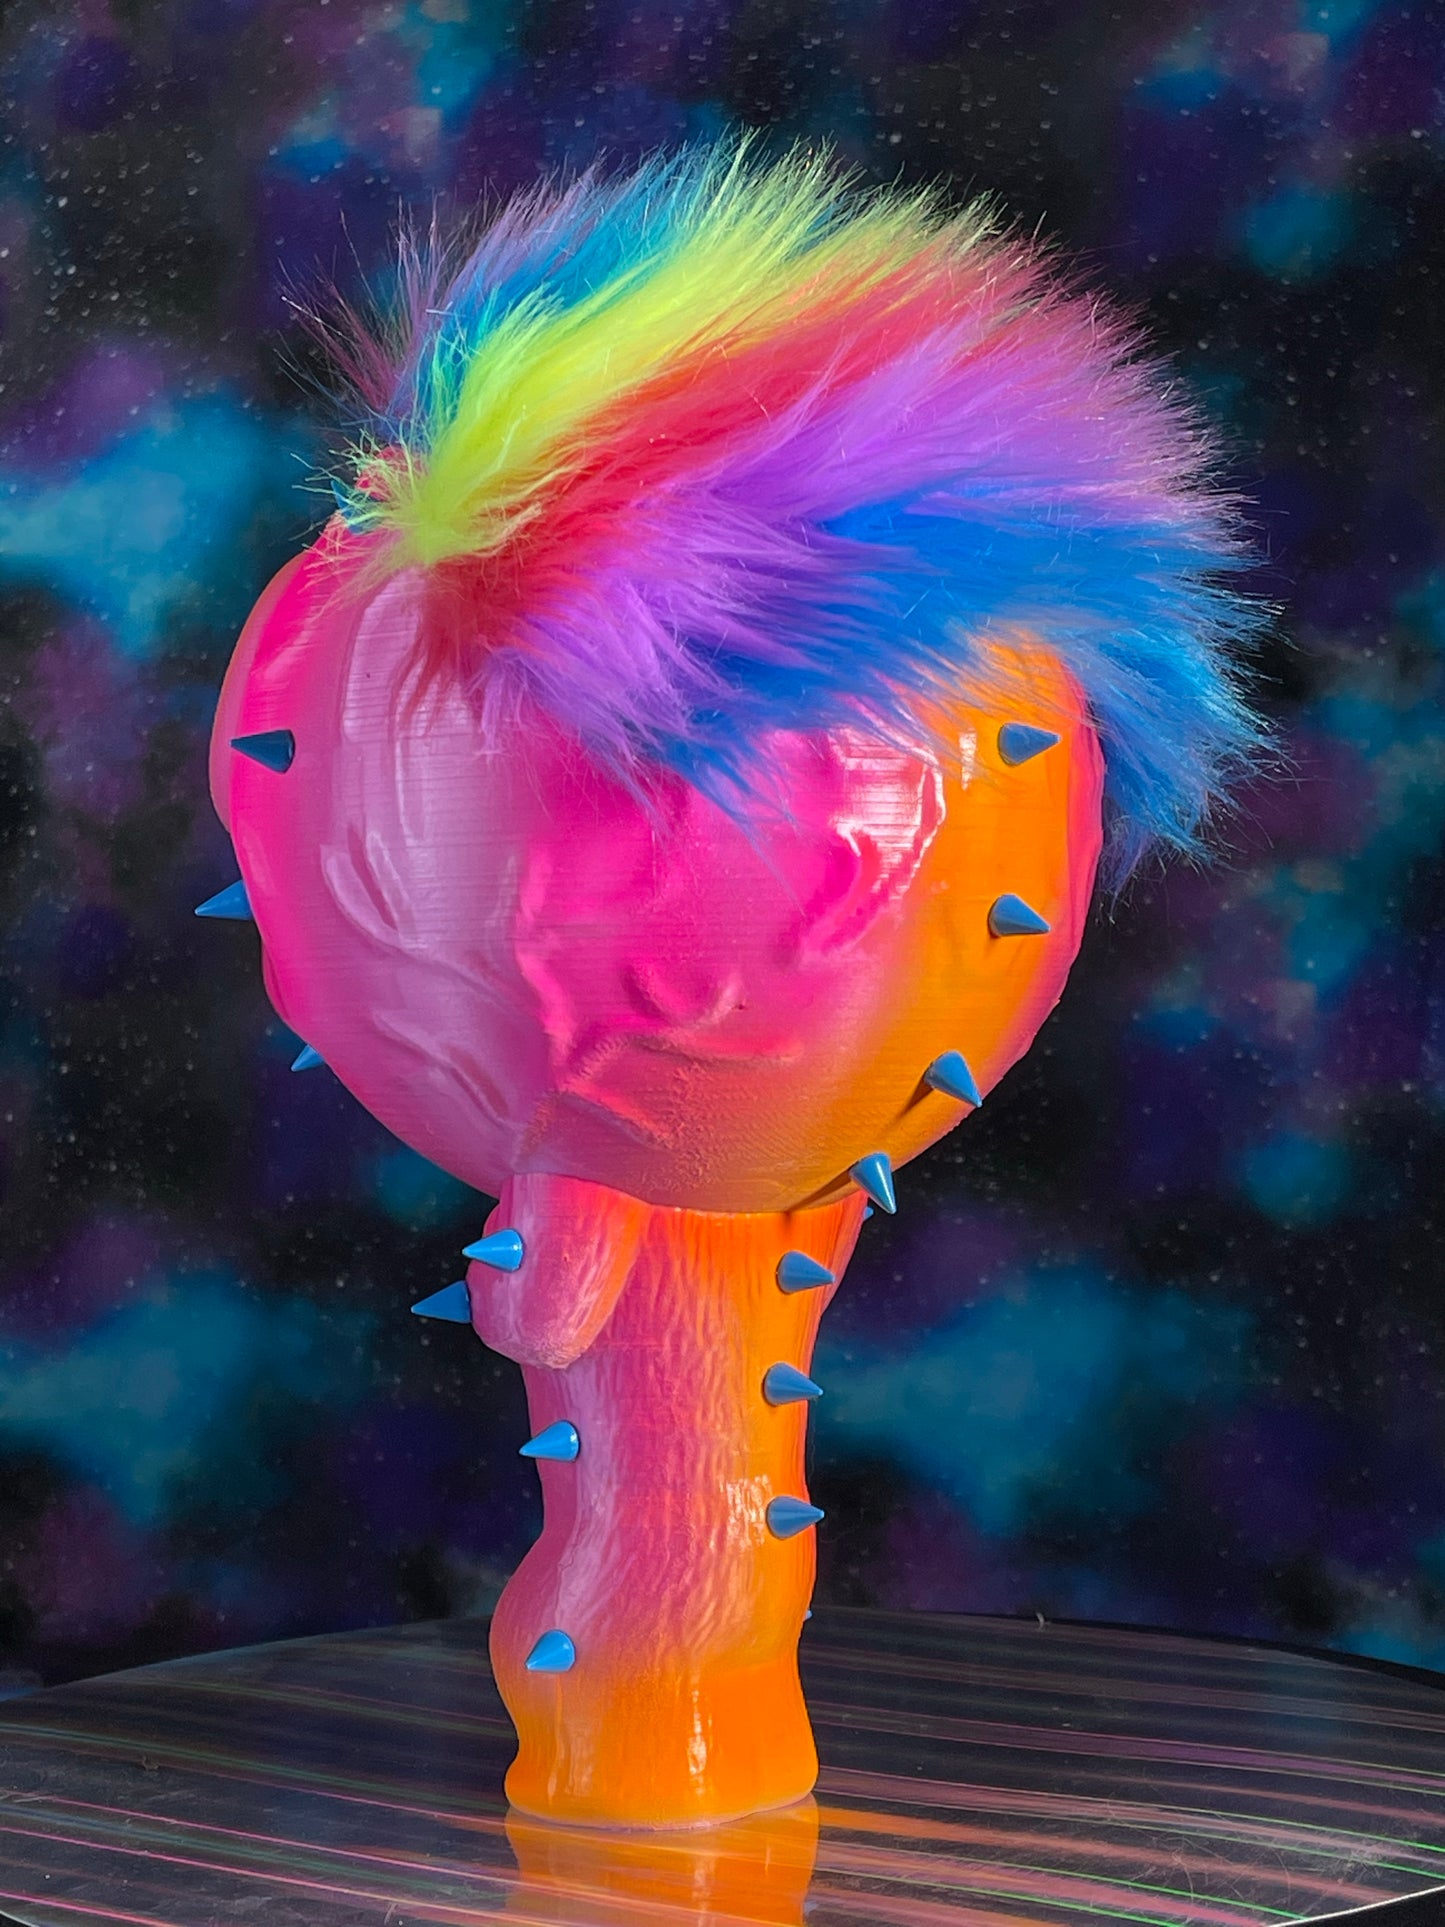 Moon Head Giant Head Freak: Boogie Wonderland